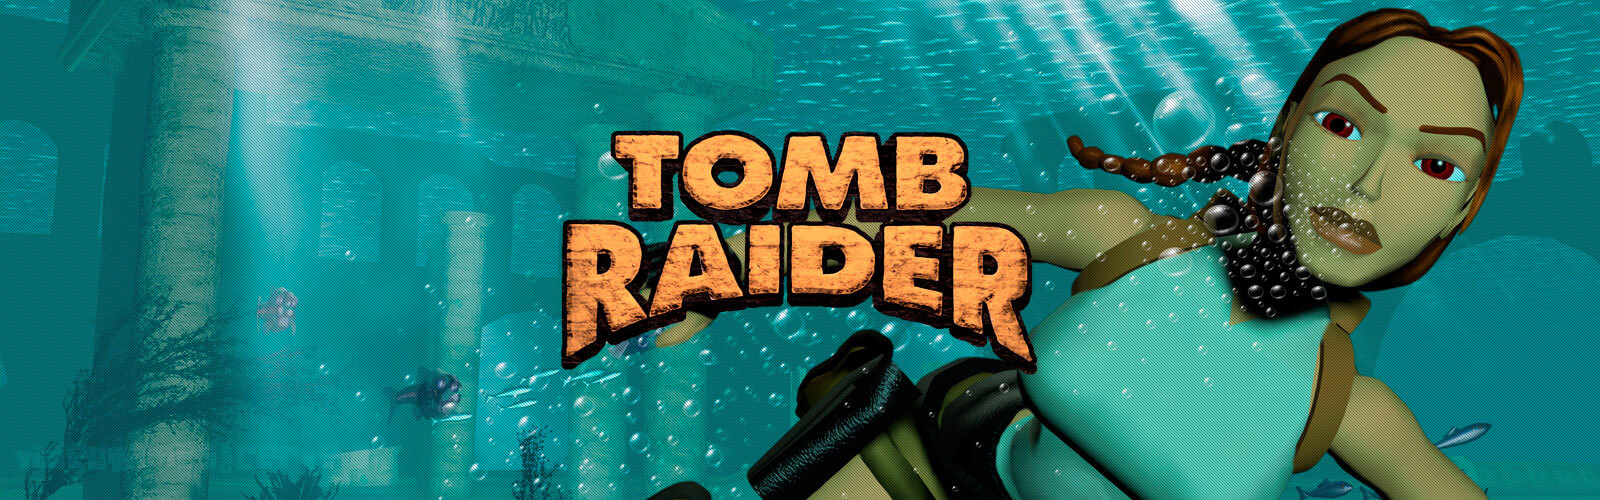 Análise - Tomb Raider Cover